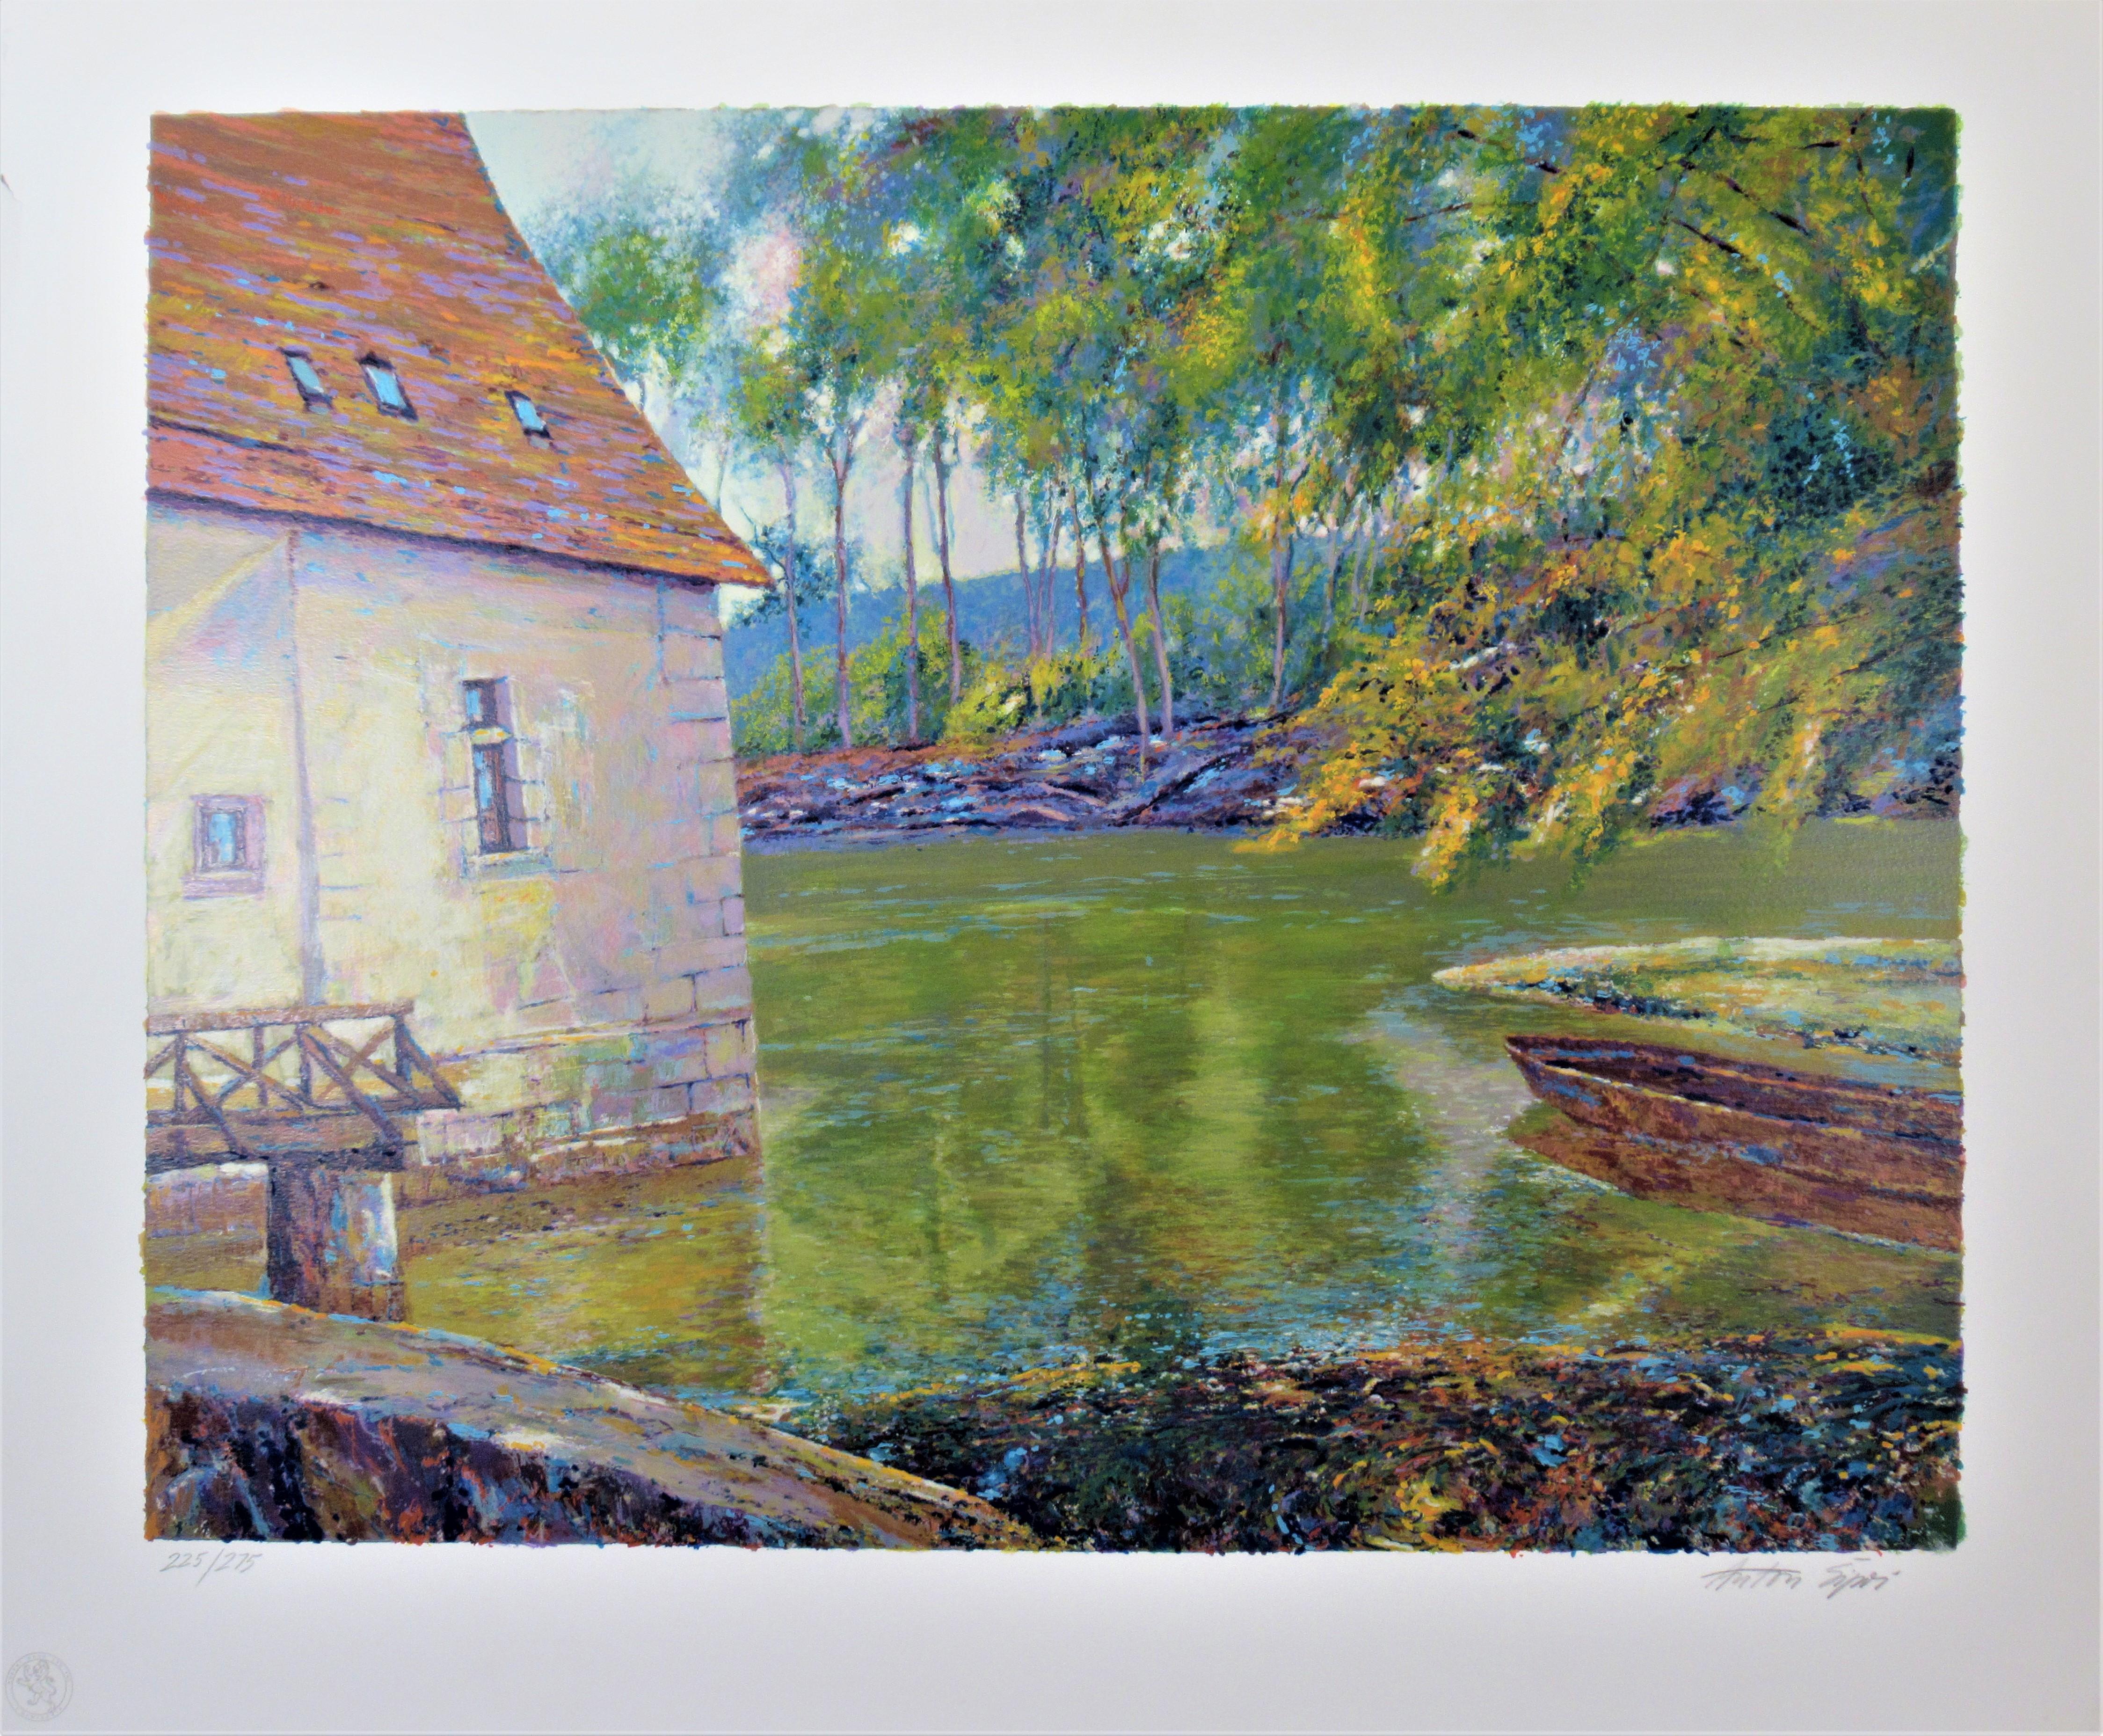 Anton Sipos Figurative Print - "Landscape with Pond" Large original color serigraph